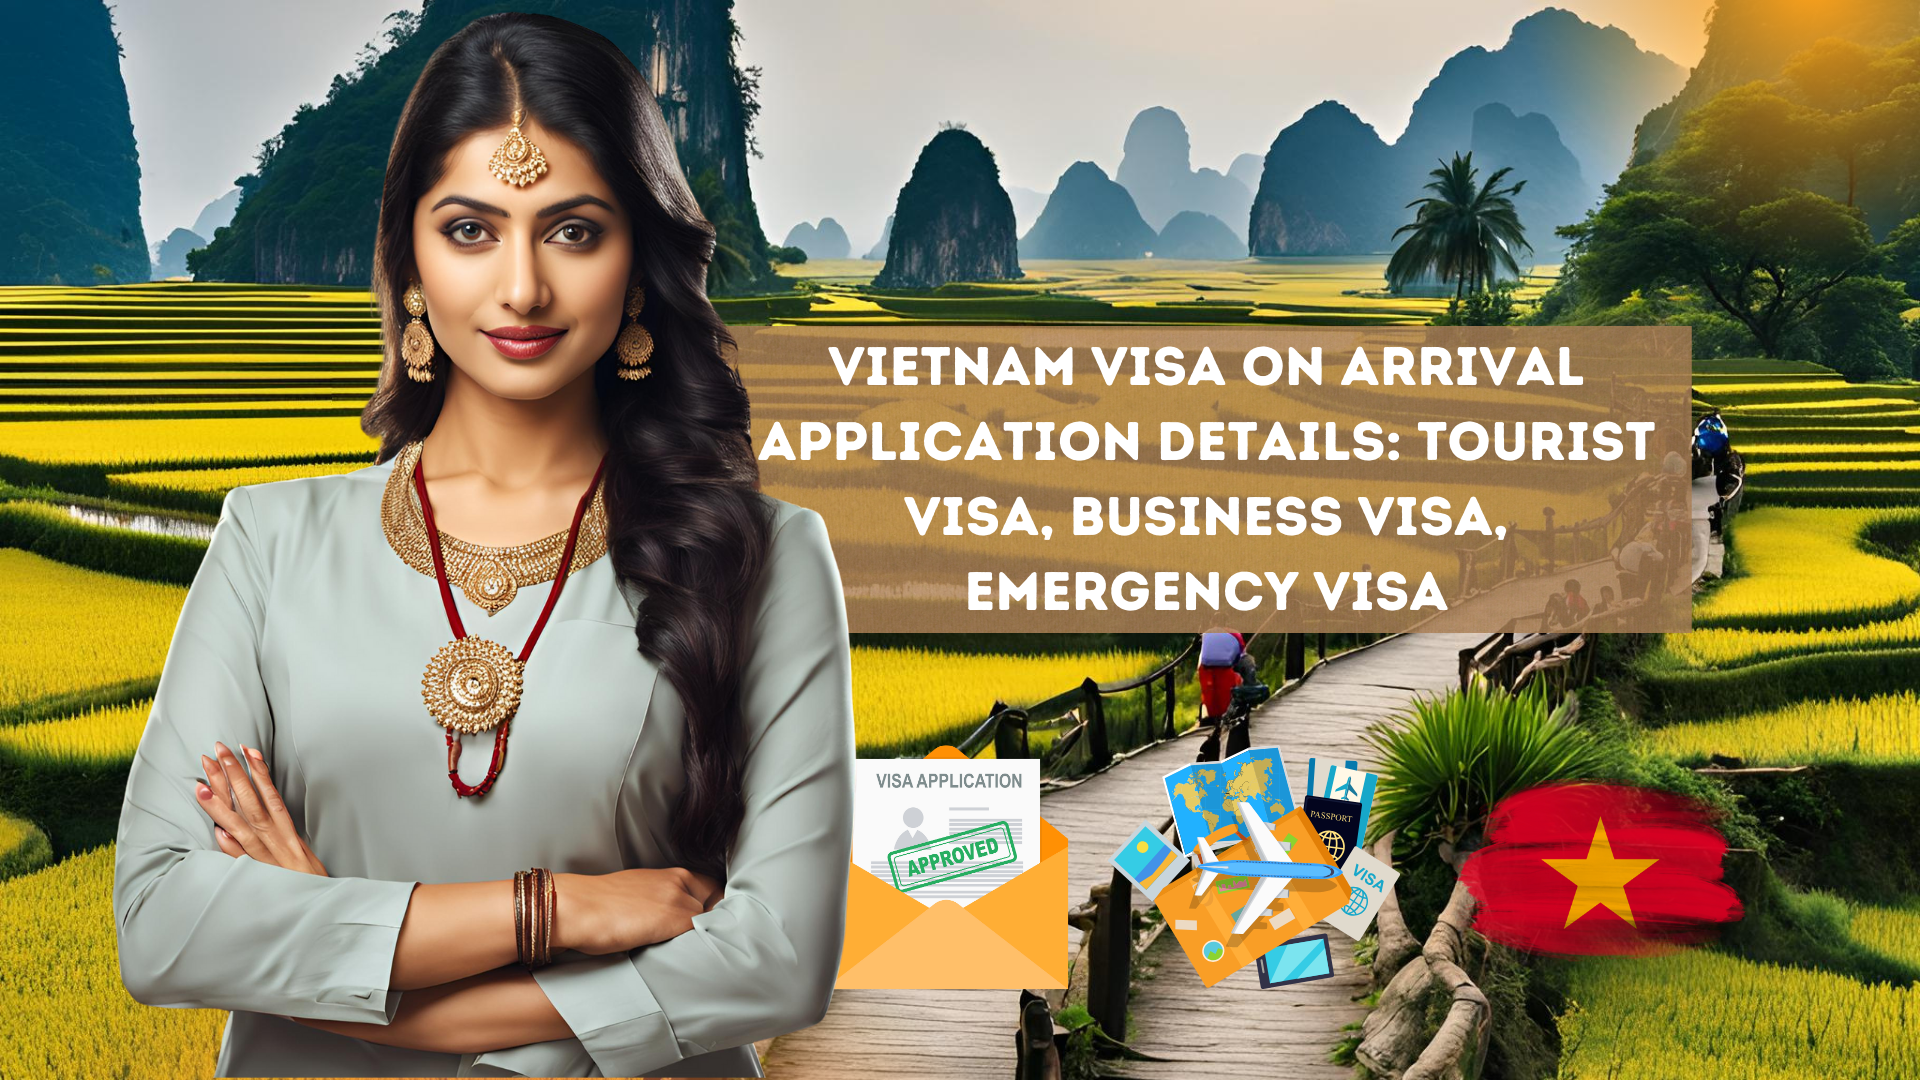 Vietnam visa on arrival application details: tourist visa, business visa, emergency visa